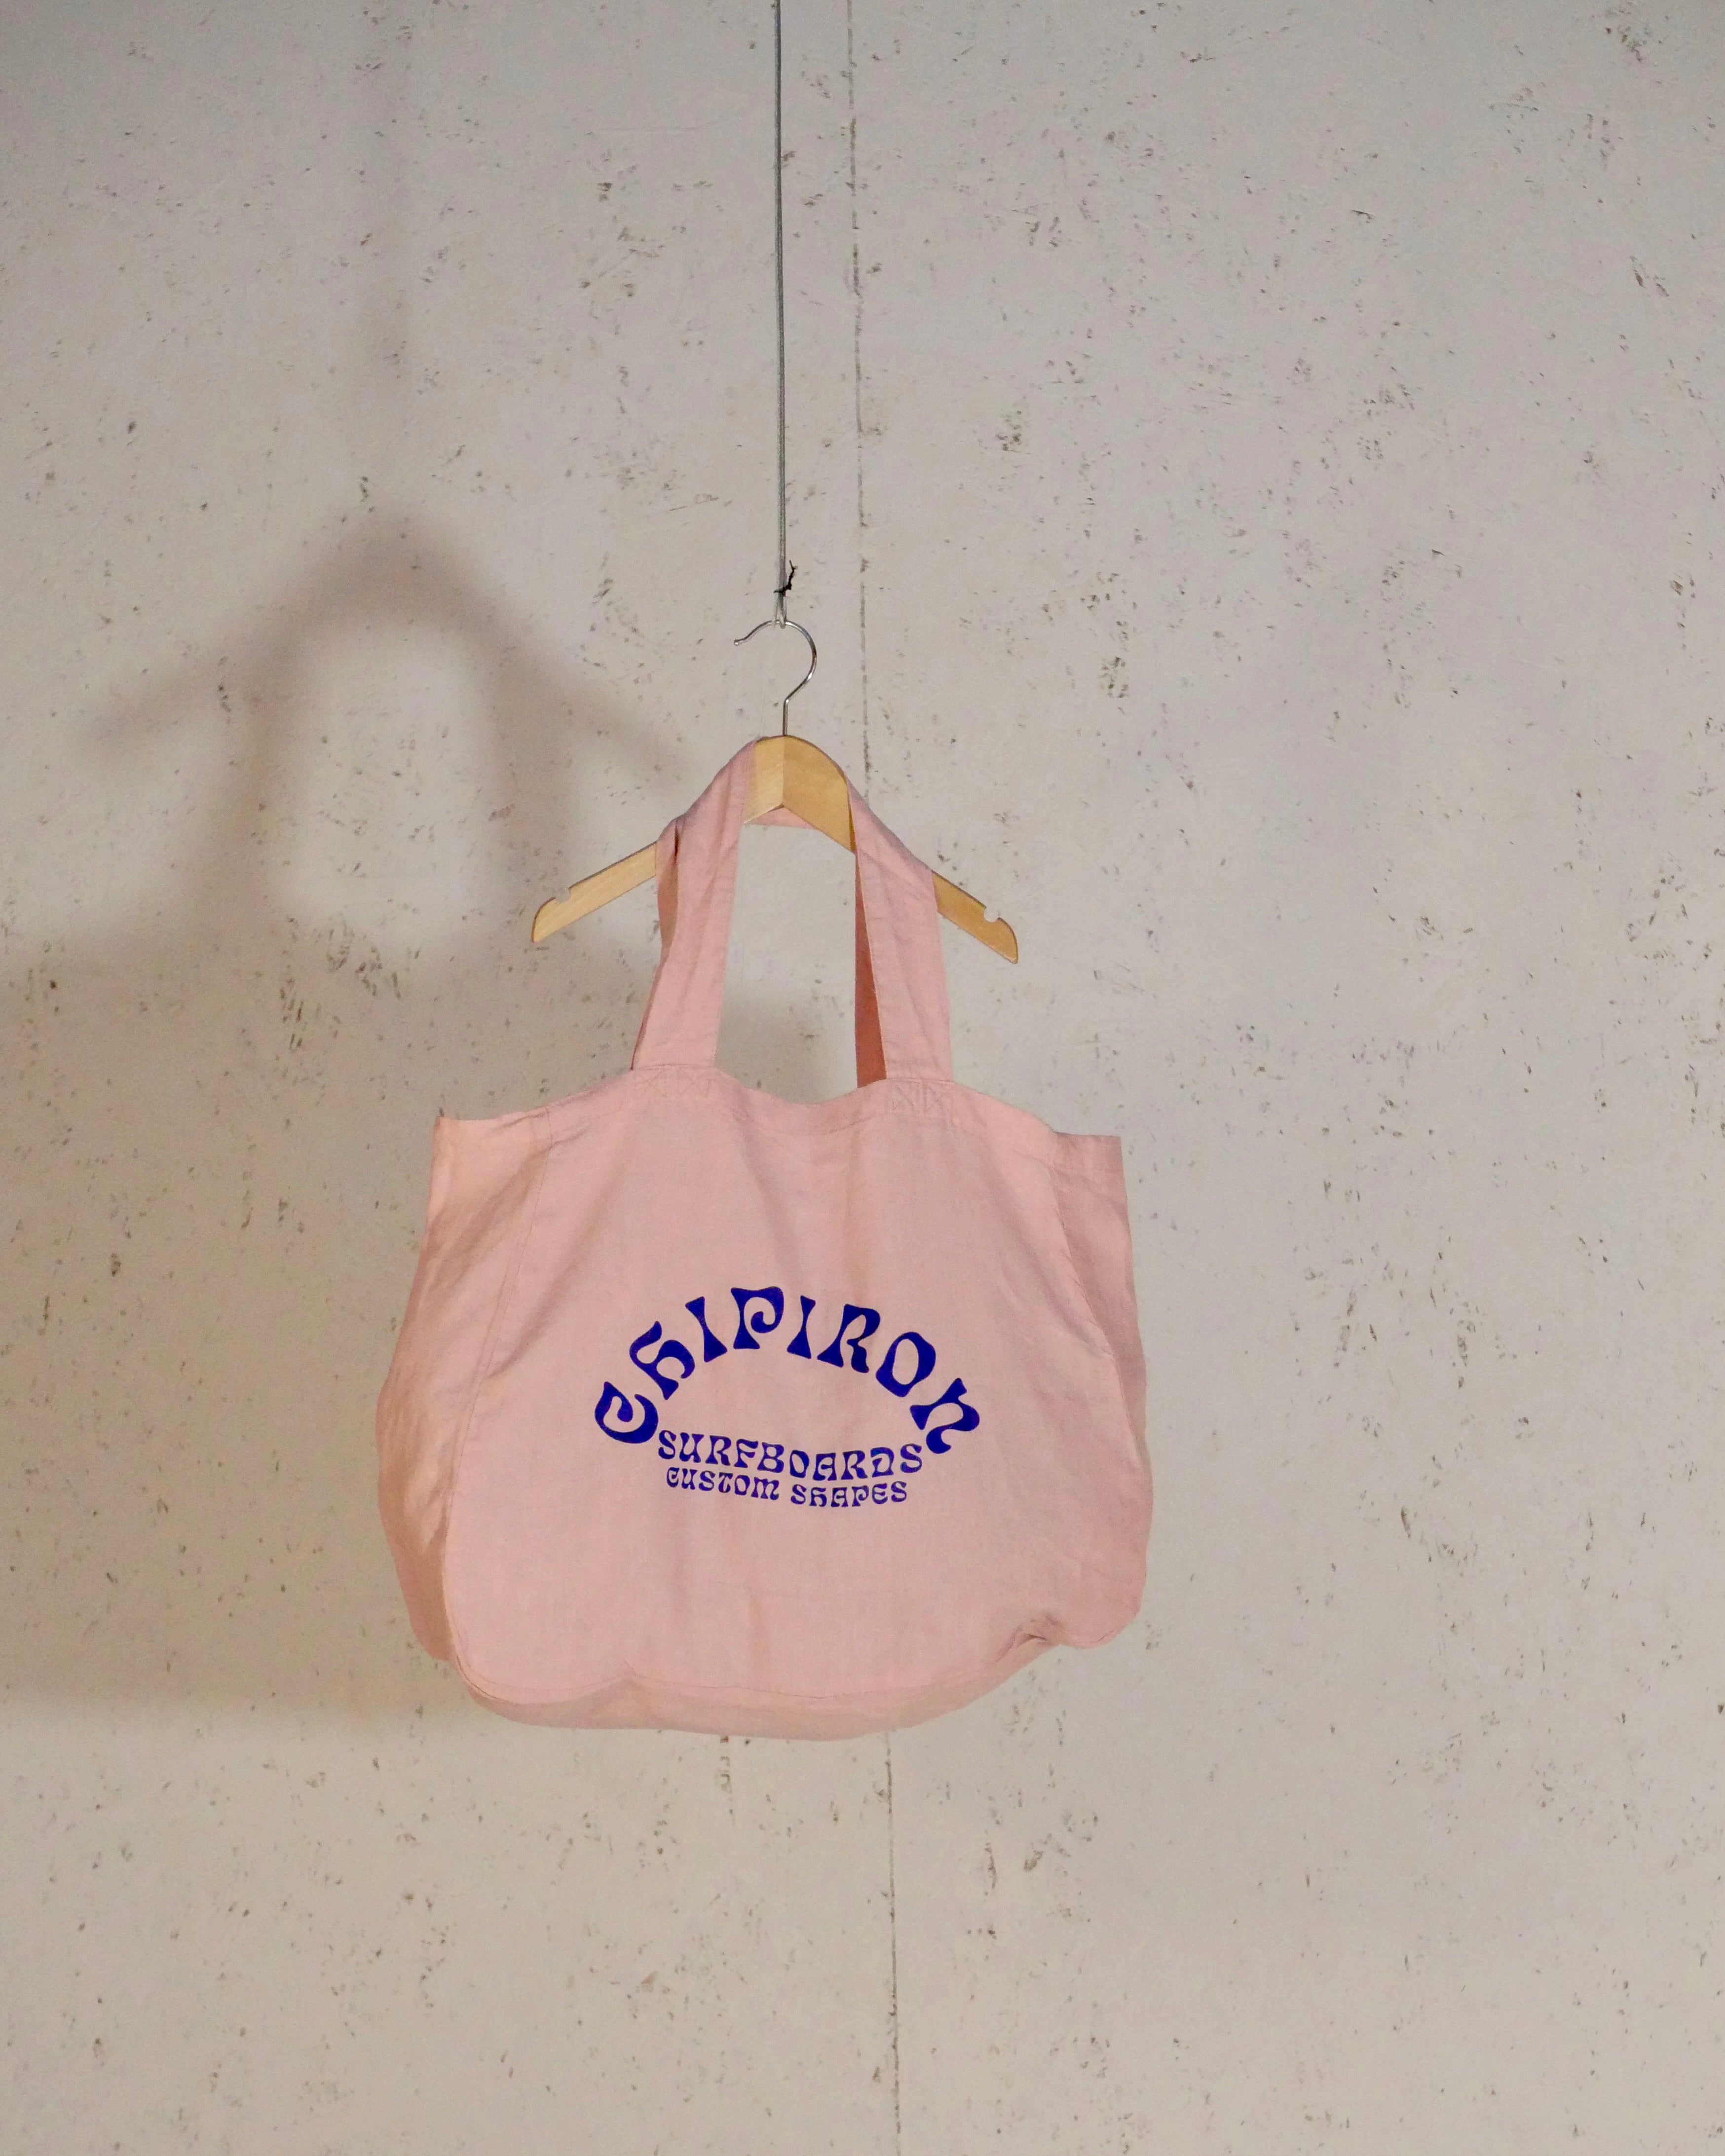 Custom Shapes large pink tote bag